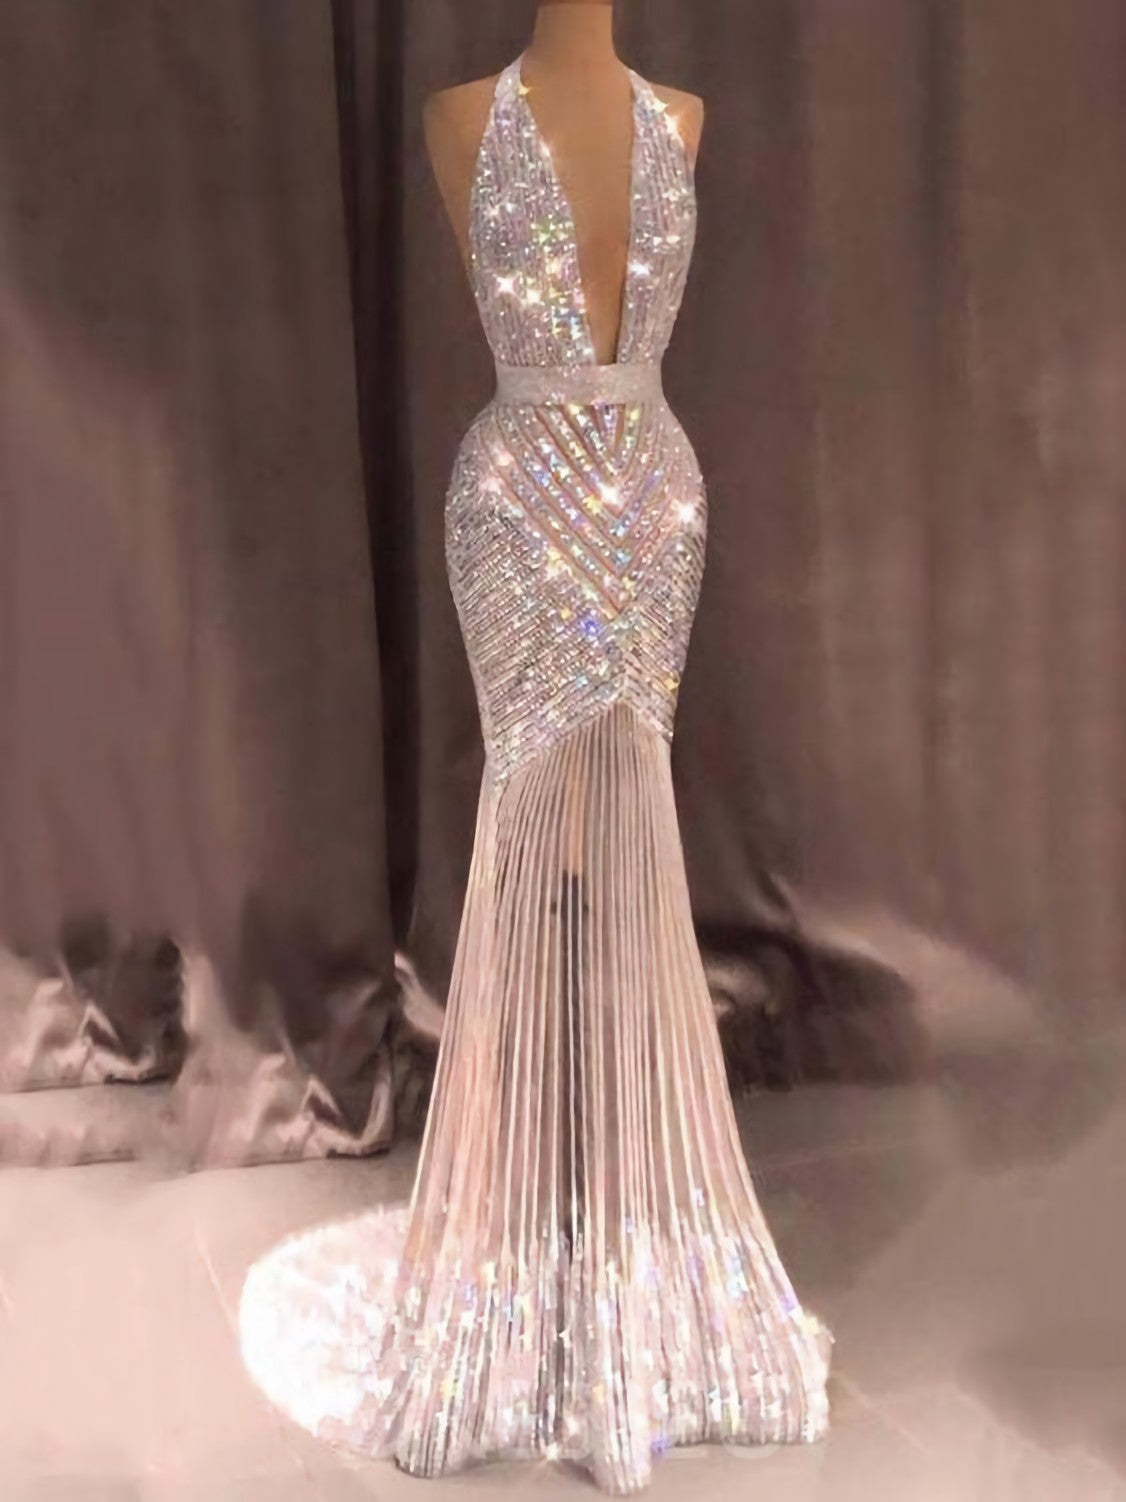 Stunning Tulle Halter Neckline Floor Length Mermaid Evening Corset Prom Dresses outfit, Homecoming Dress Classy Elegant